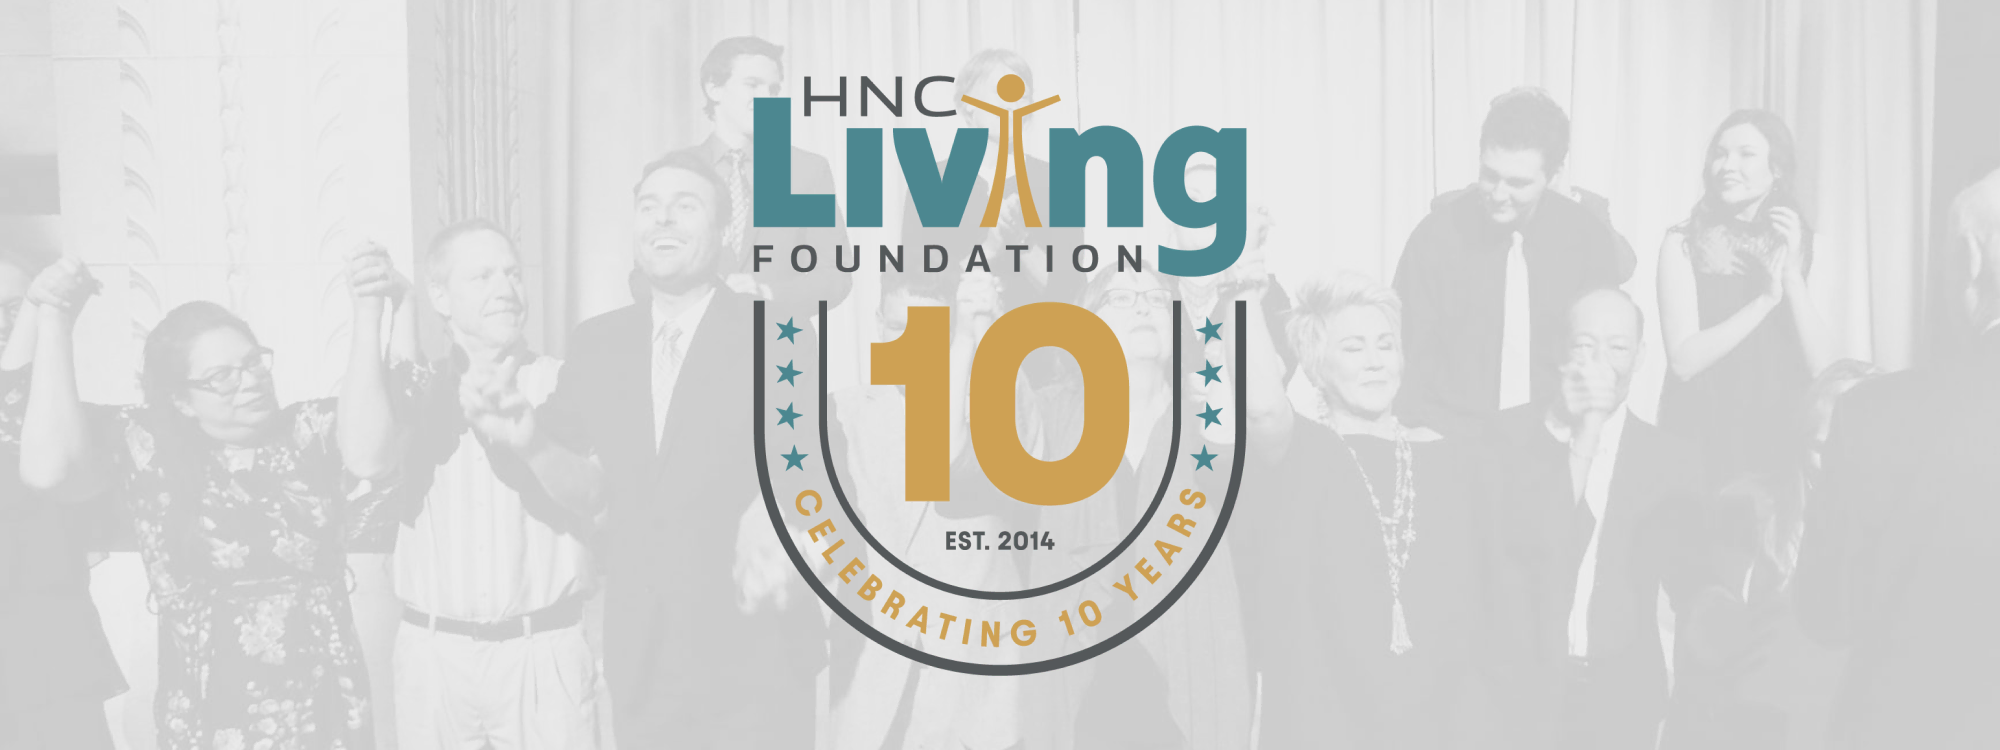 HNC Living Foundation - Celebrating 10 years